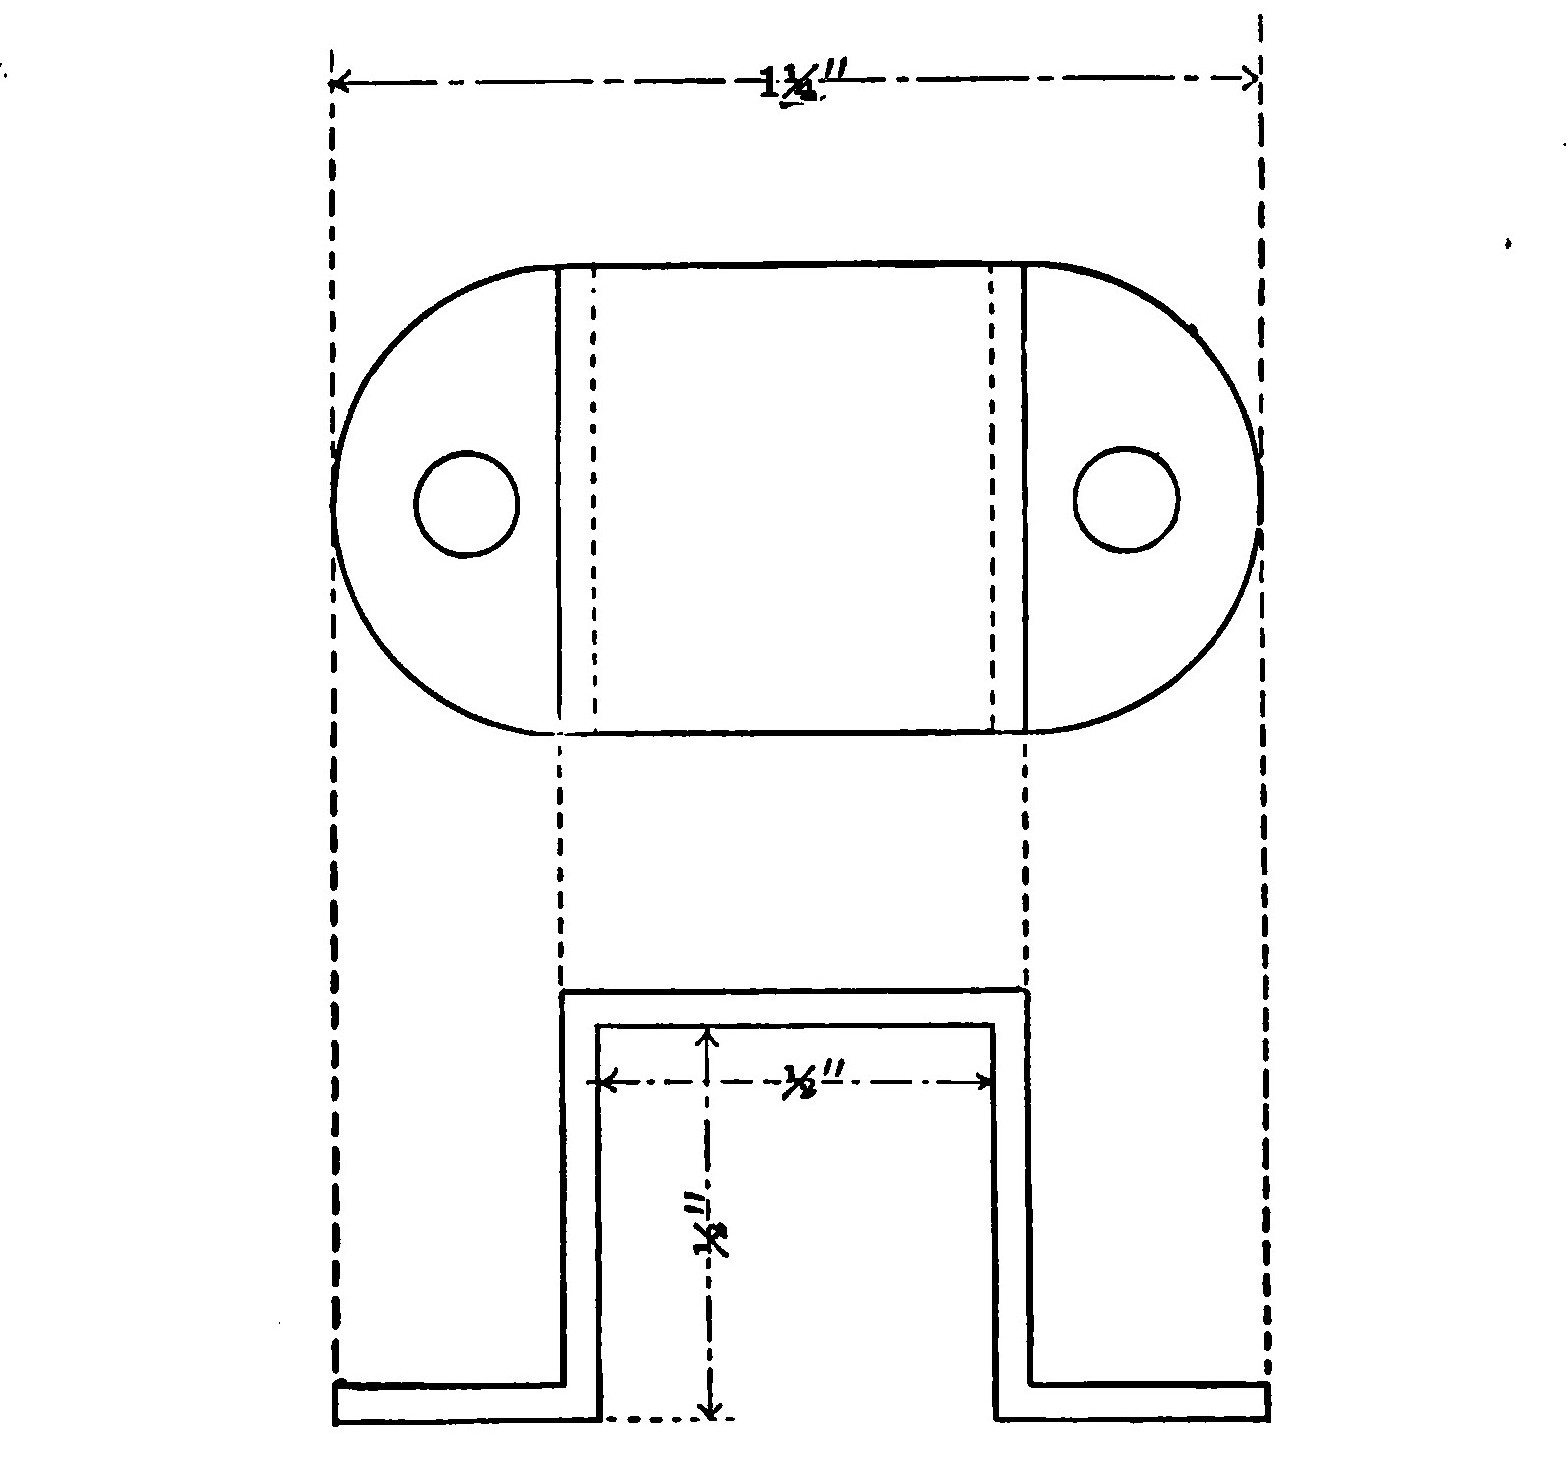 Fig. 10.—Rib clamp.